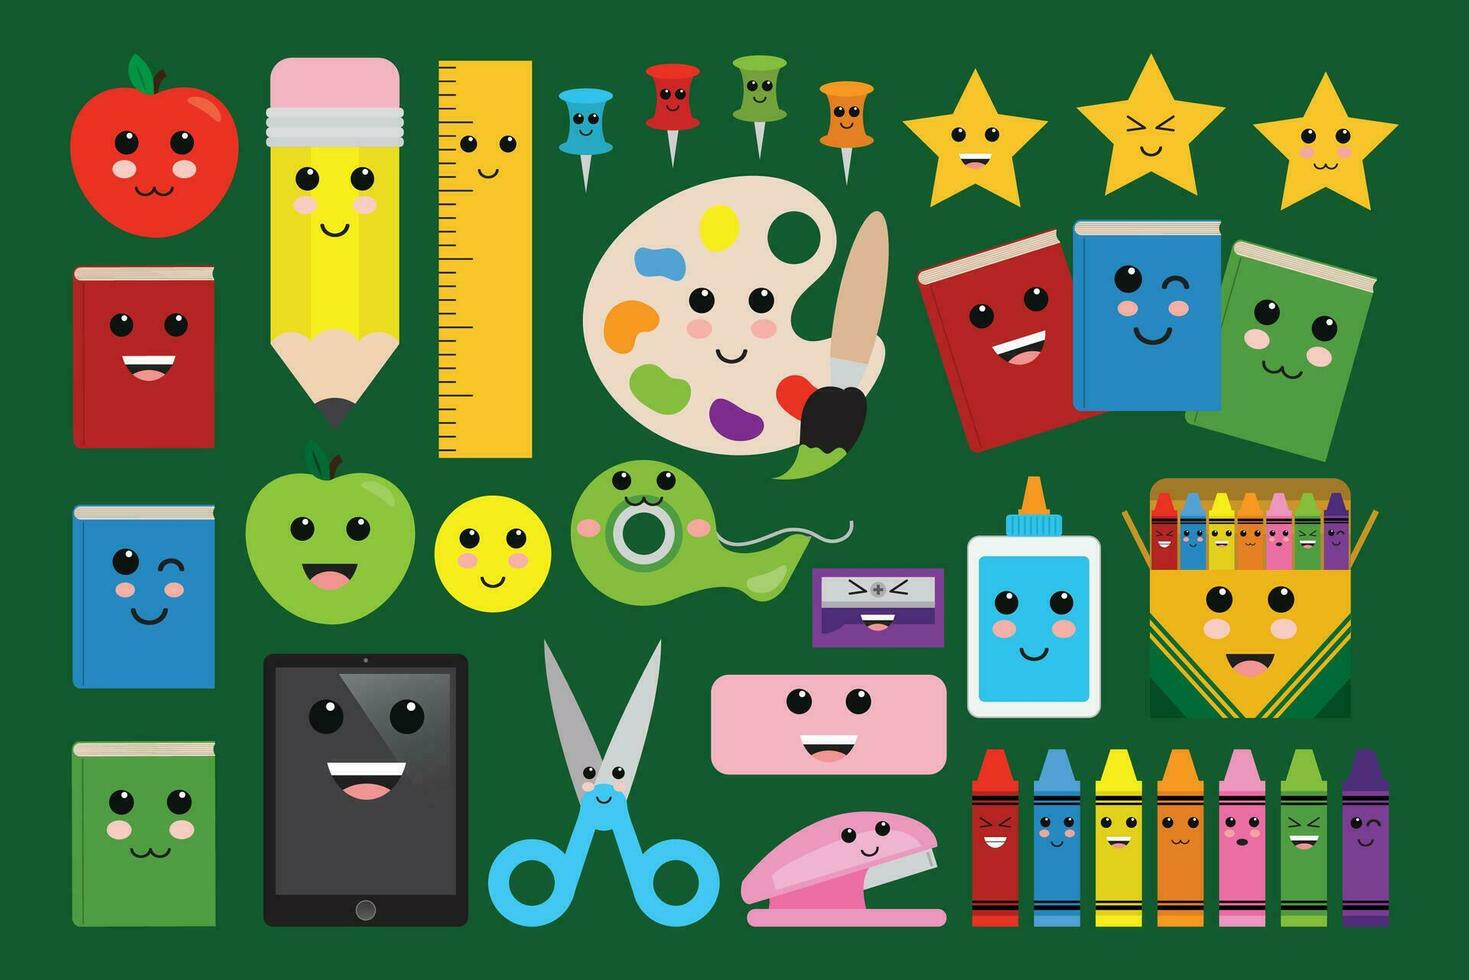 Back to school supplies. Cute emoji face school supplies. Crayons, pencil, apple, ruler, ipad, scissors, books, stars. Vector illustration in flat style.